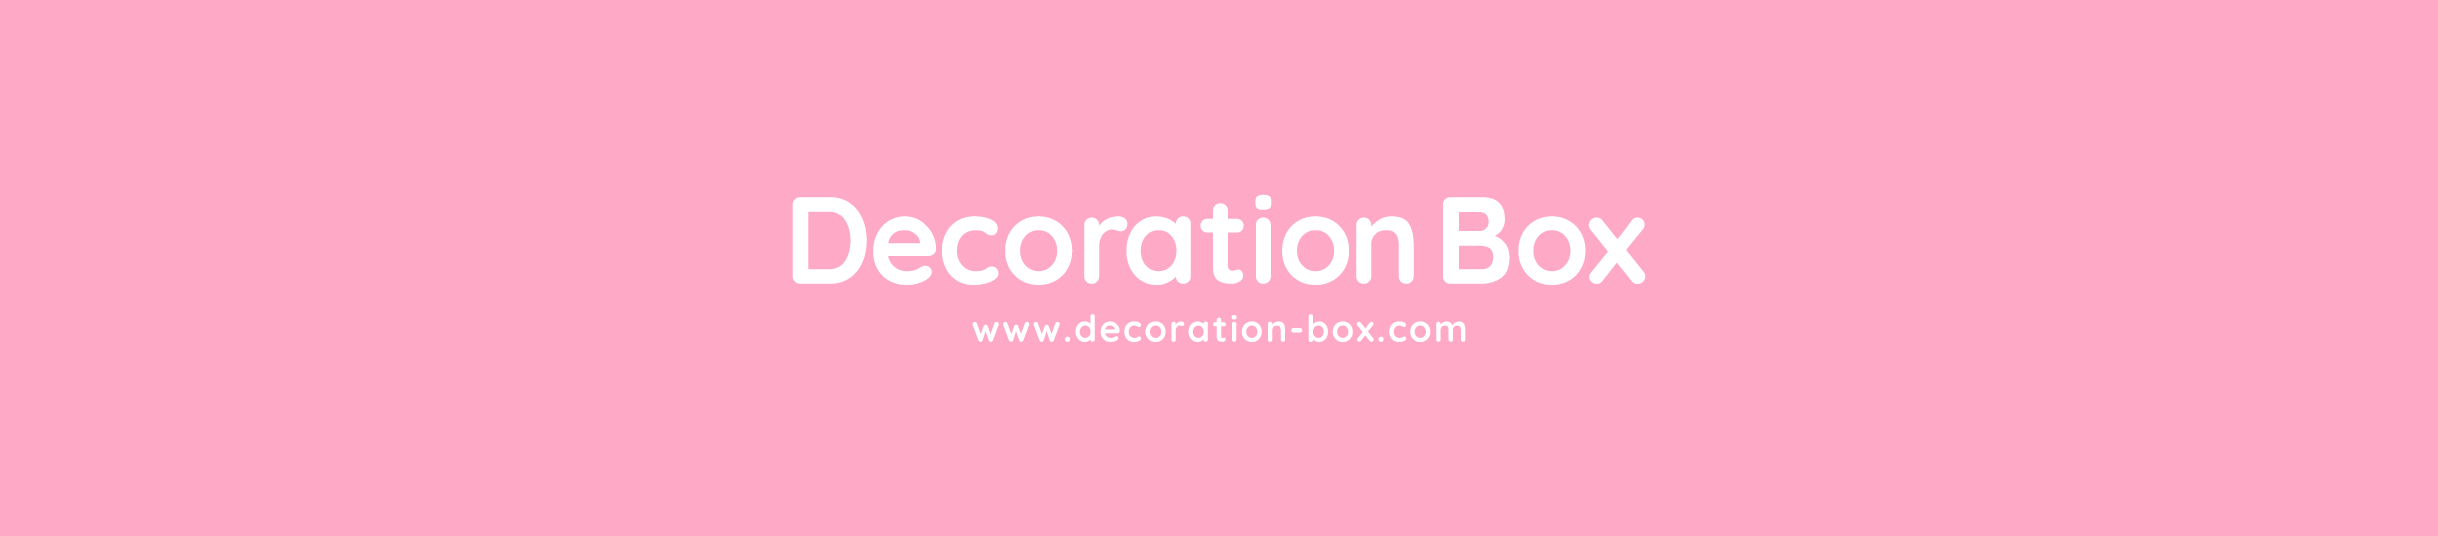 Decoration Box